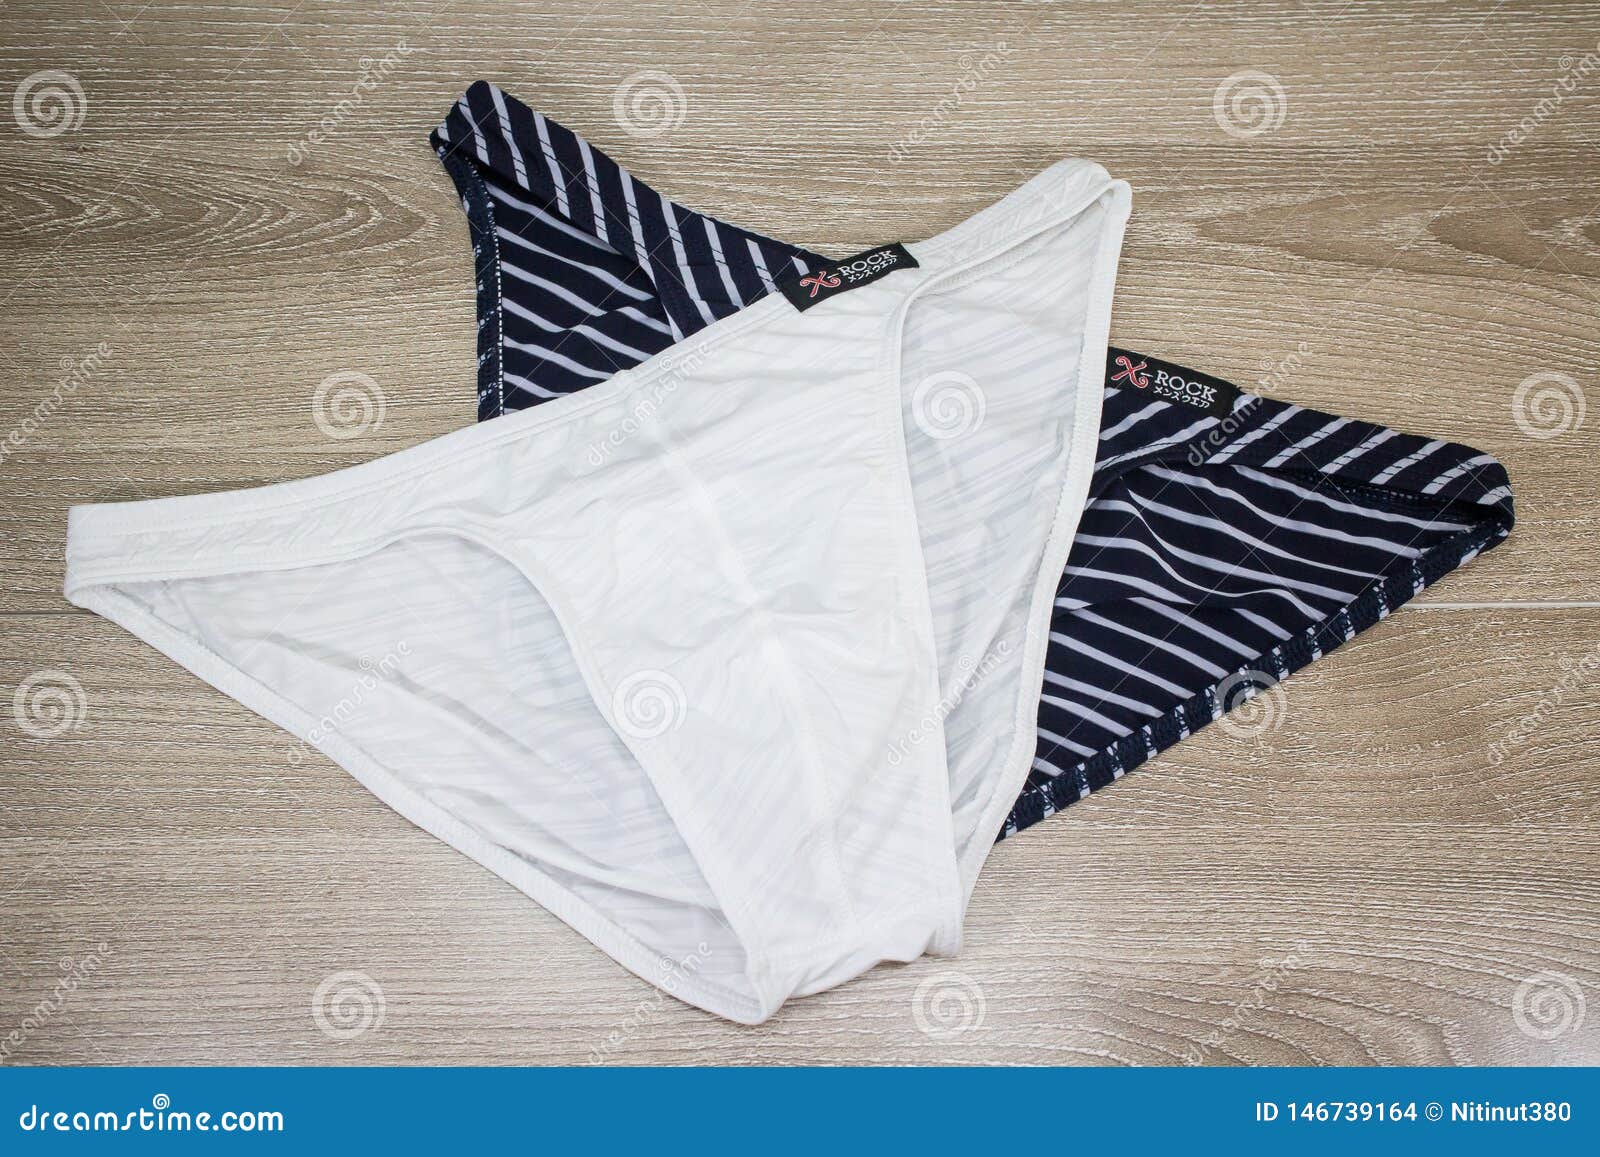 X Rock Thailand Brand Men Underwear Editorial Stock Image - Image of ...